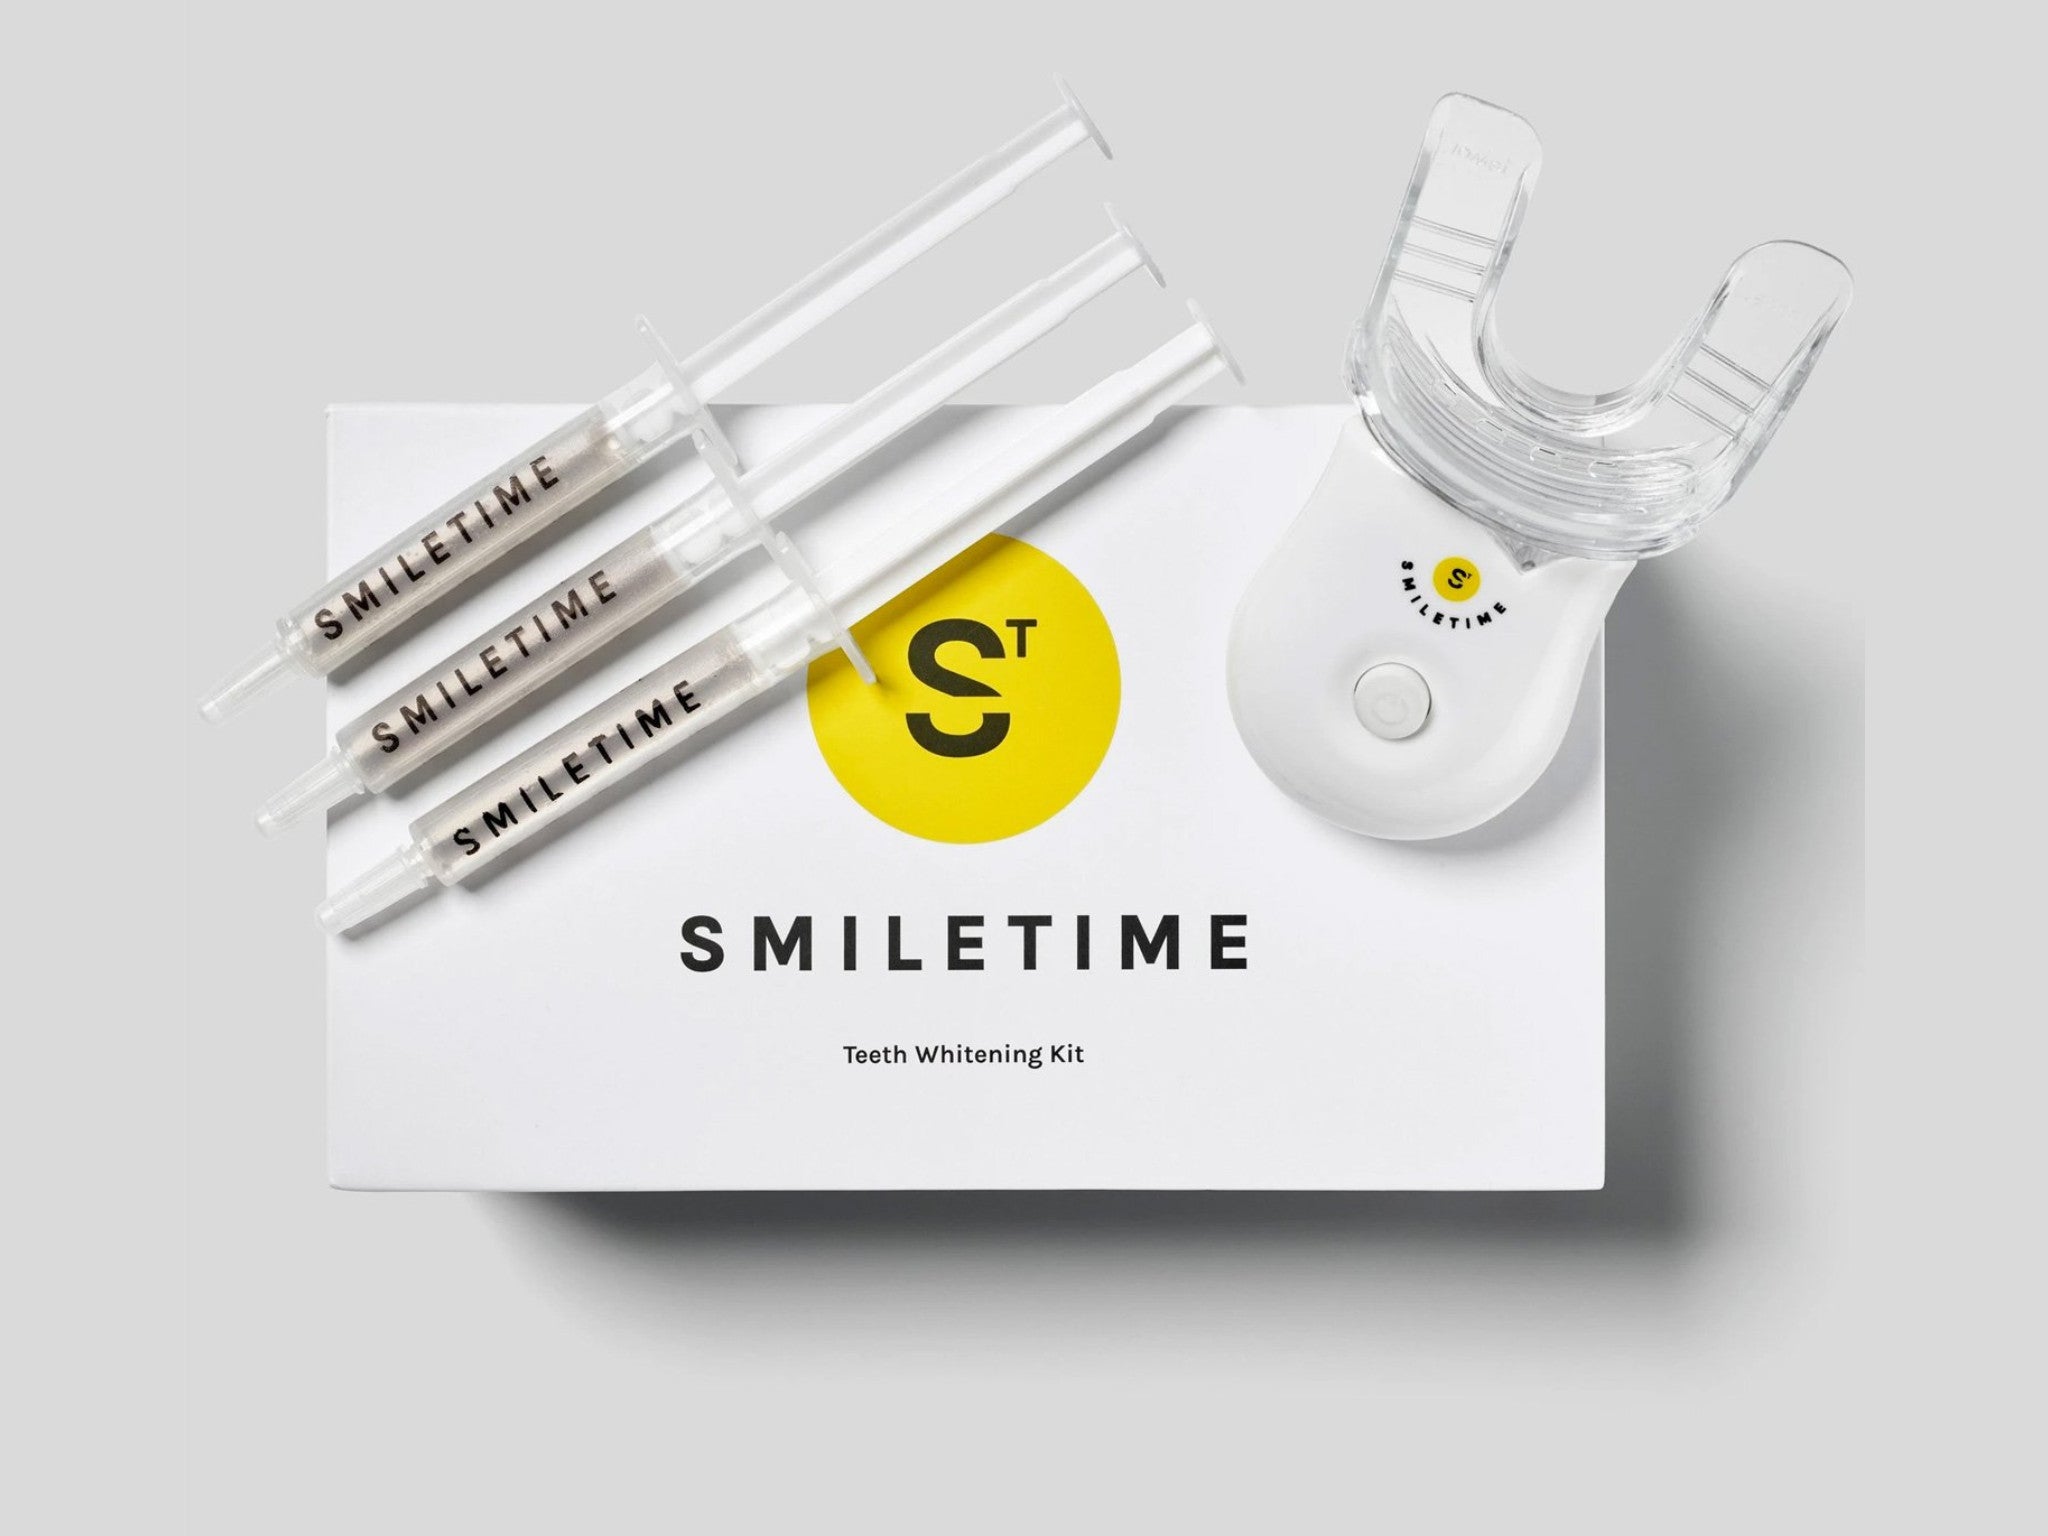 SmileTime teeth whitening kit